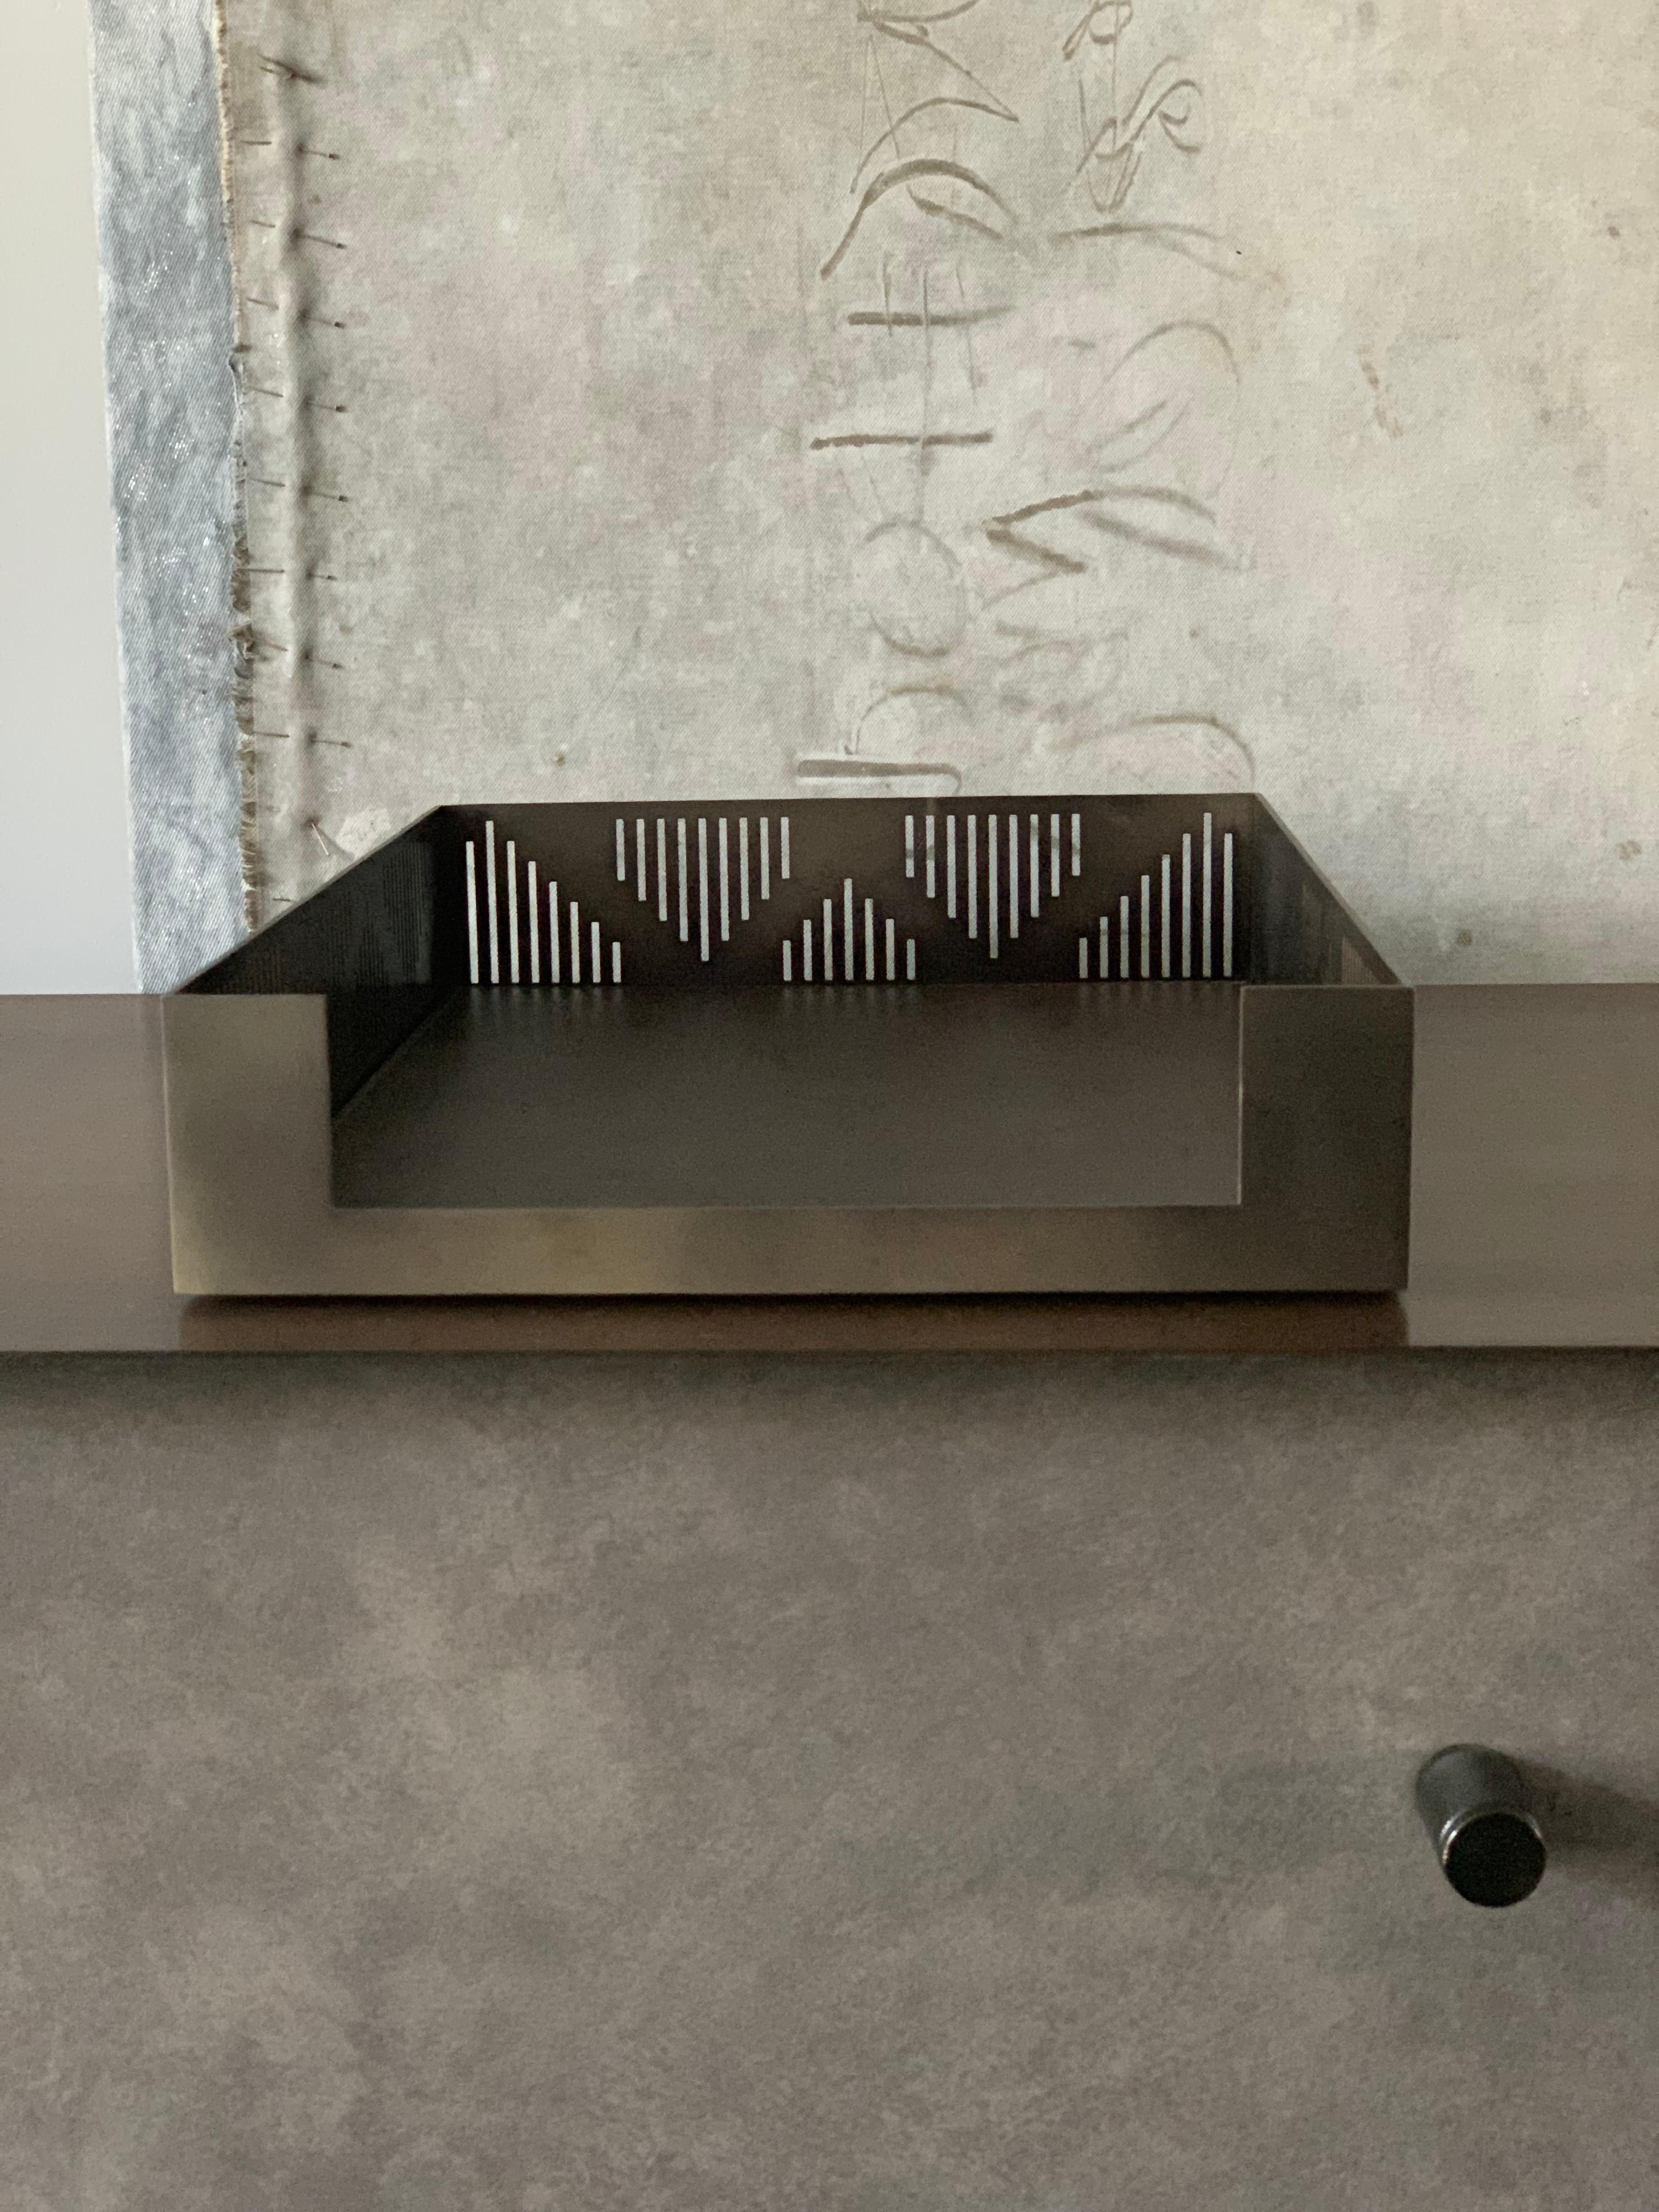 Contemporary Art Deco Inspired Vulcano Paper Tray Holder in Antique Bronze